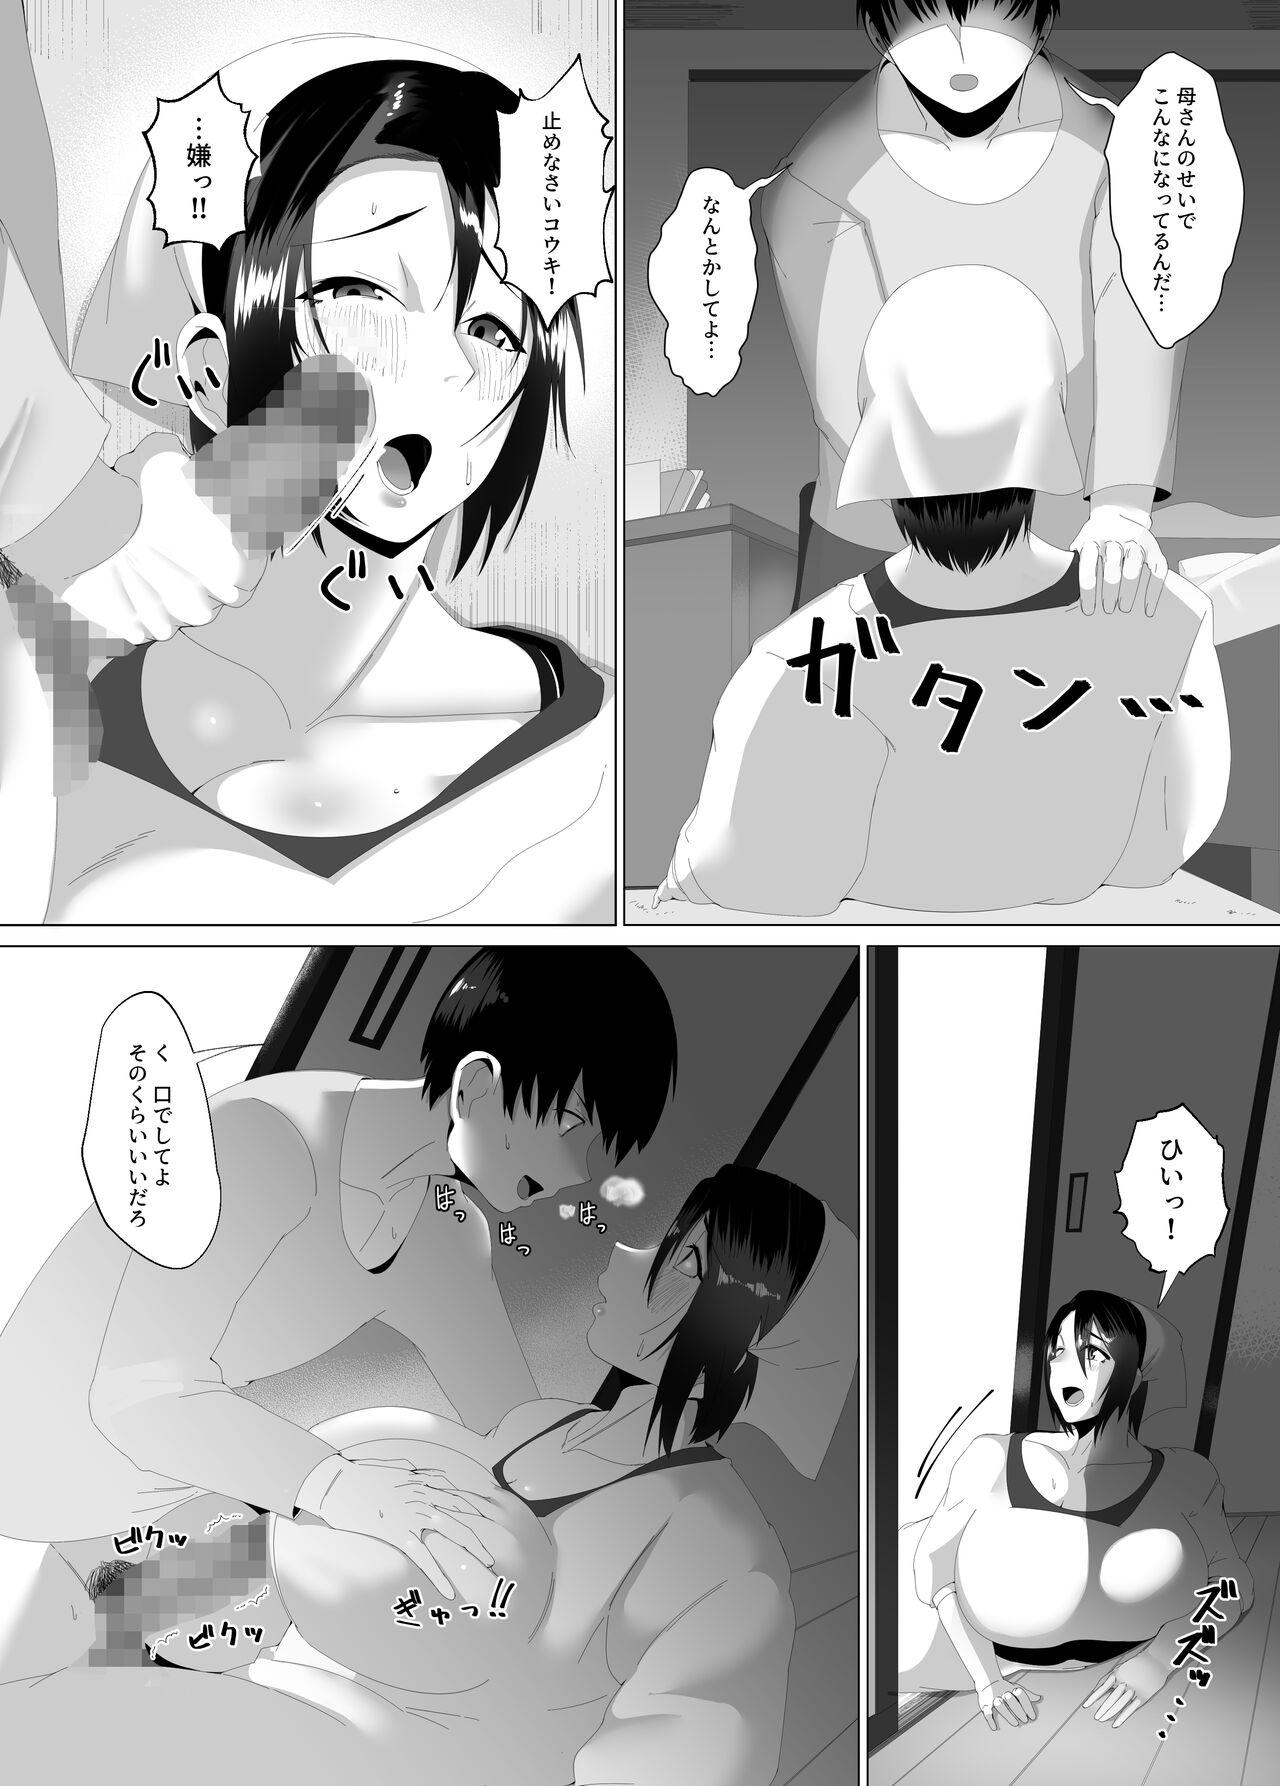 T Girl Kaasanwa kanbanmusume nikuyokuni kogaretaboshino futsuya Bdsm - Page 6